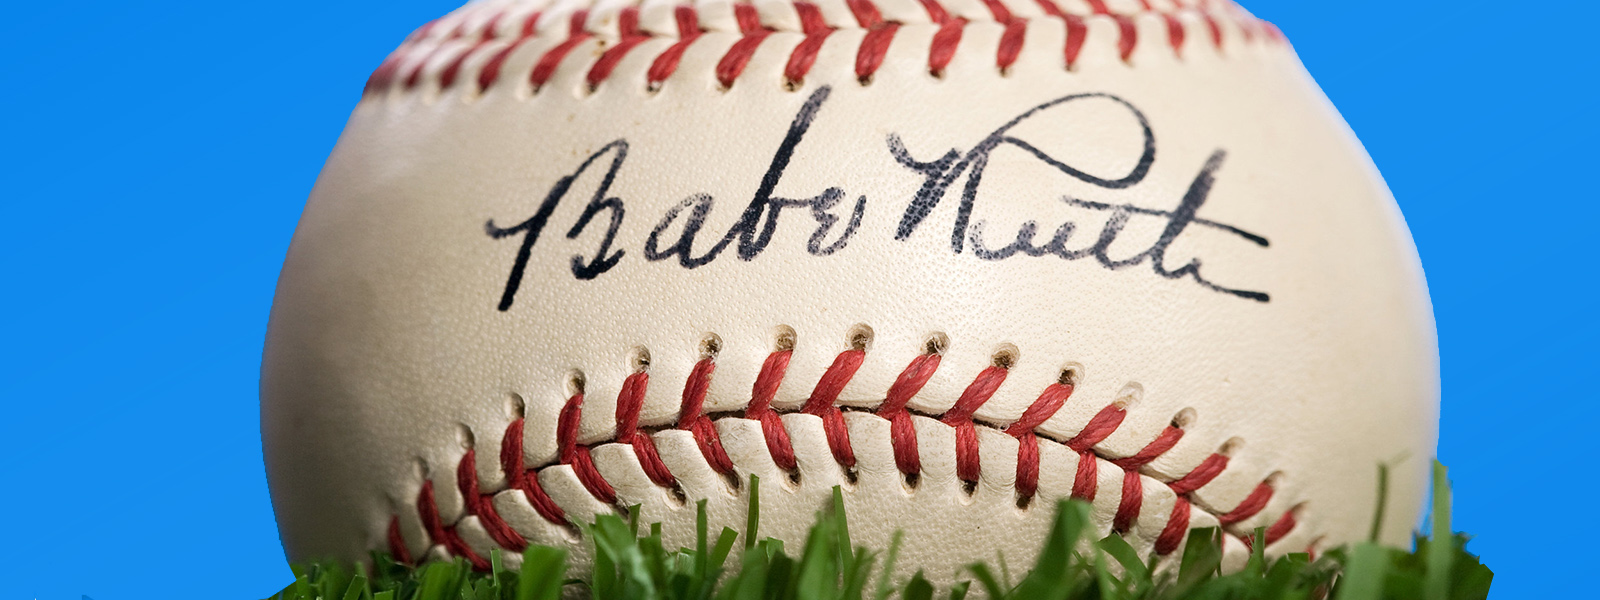 baseball signed by Babe Ruth